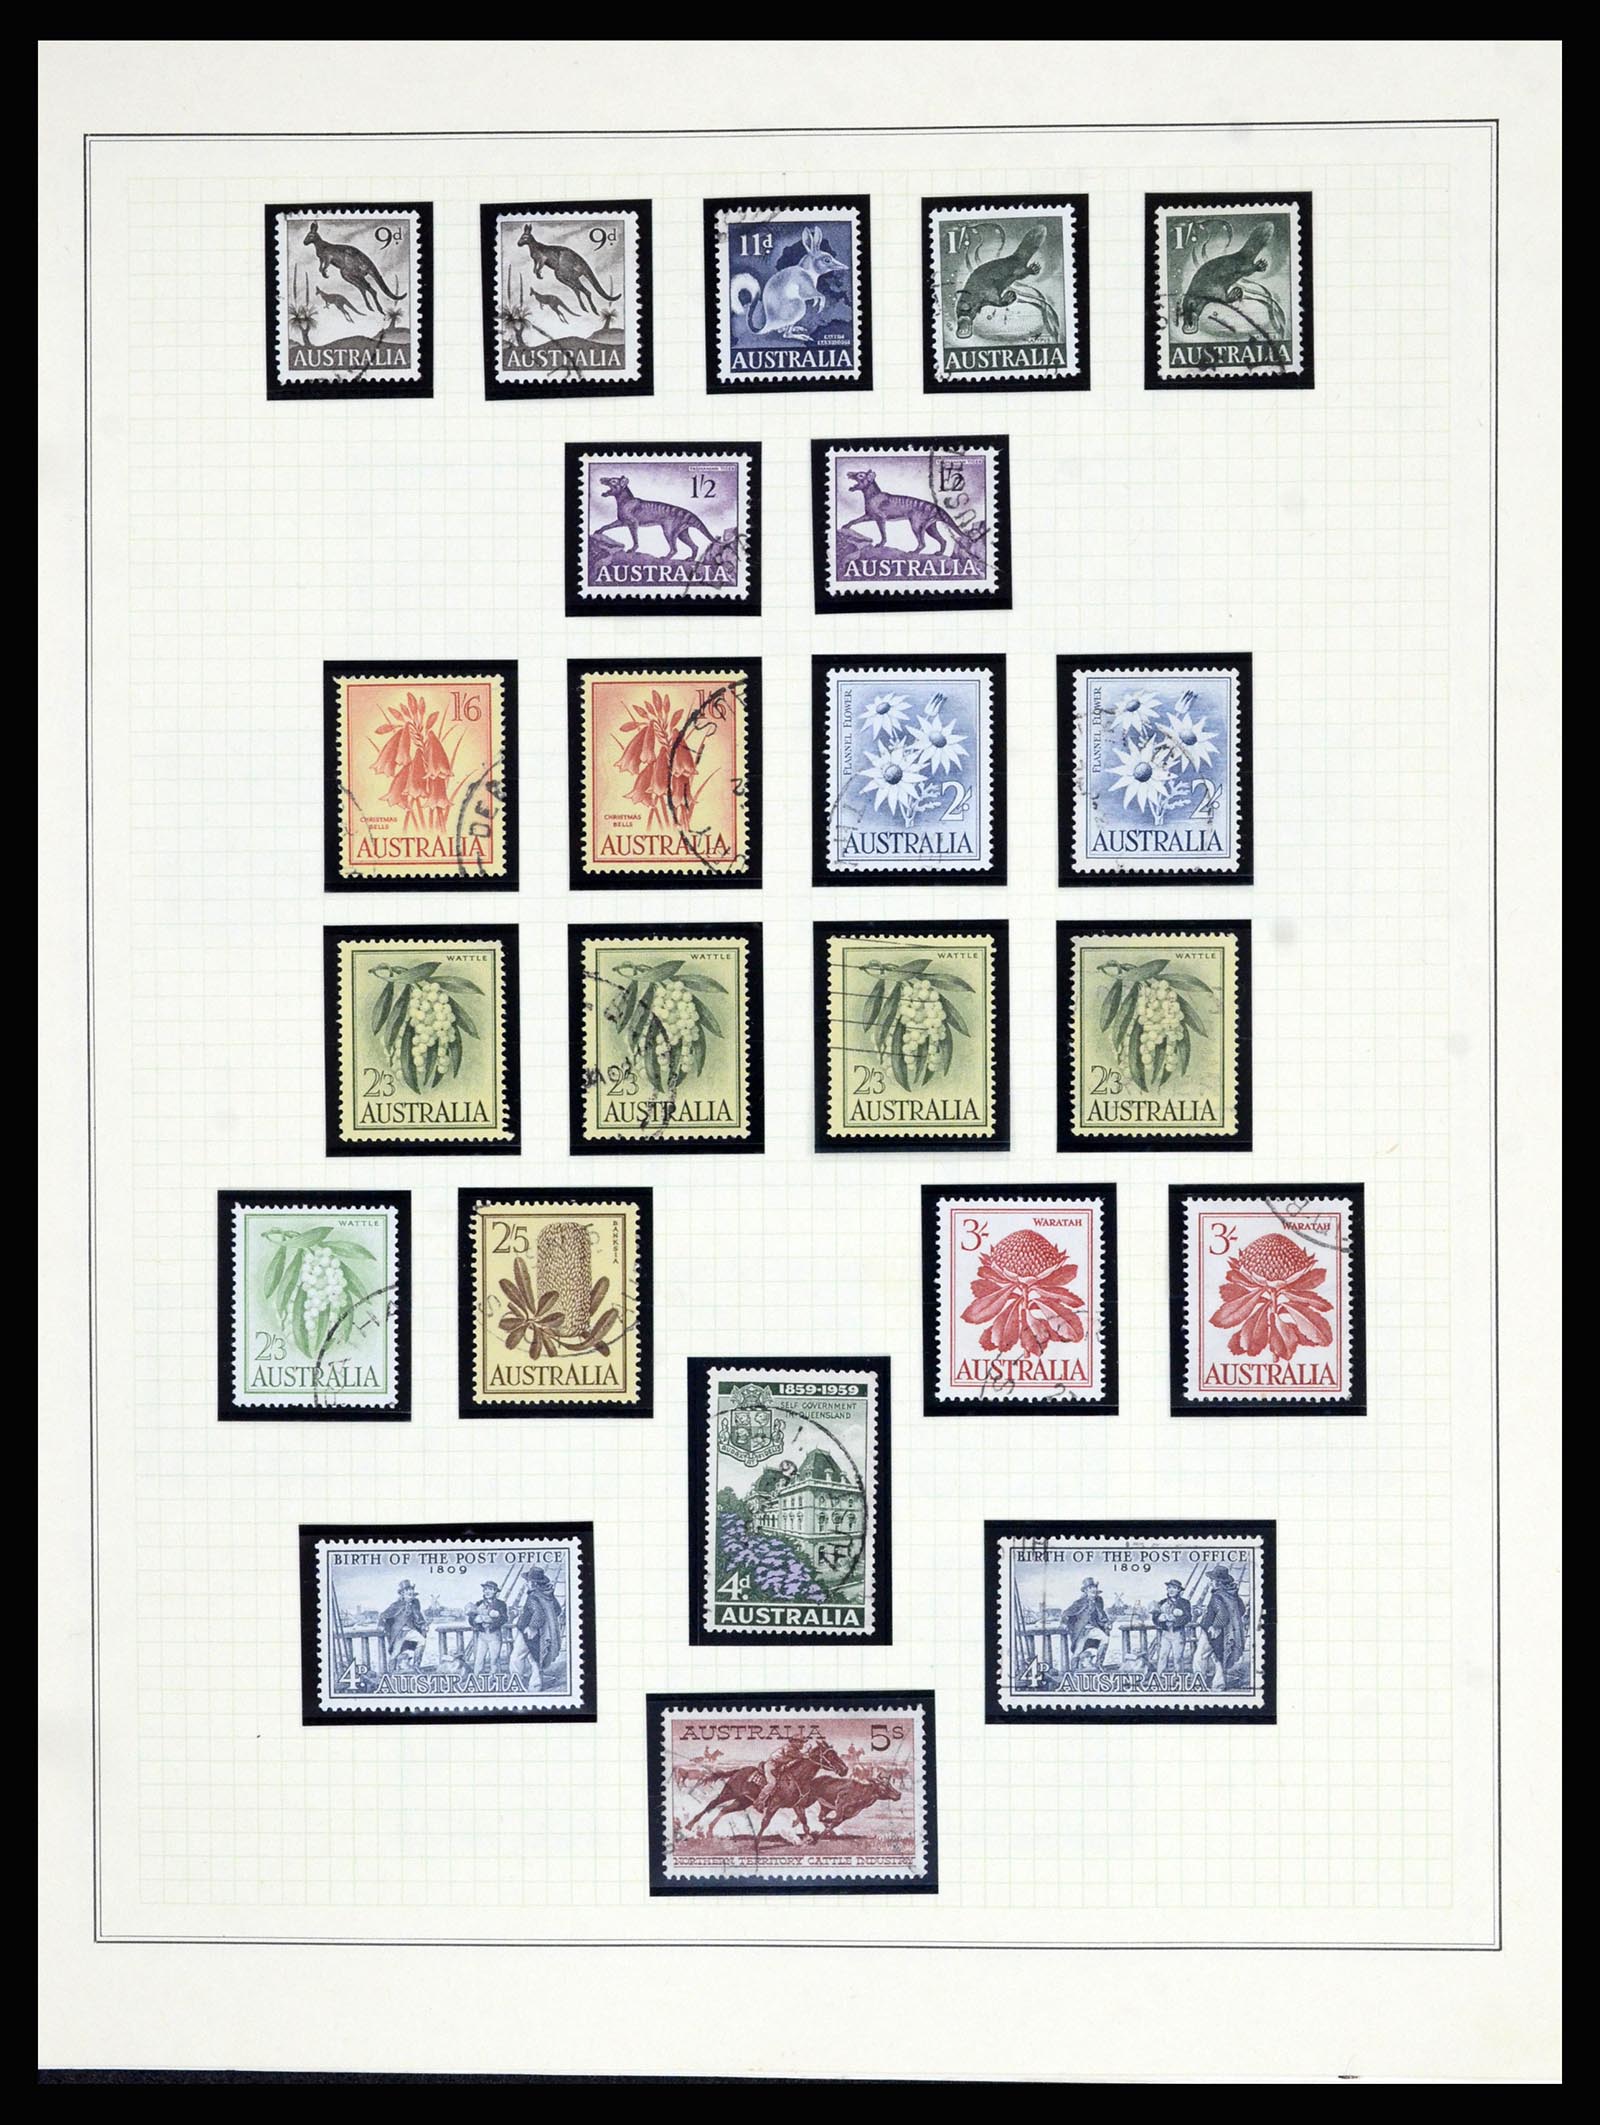 37049 022 - Stamp collection 37049 Australia 1913-1990.